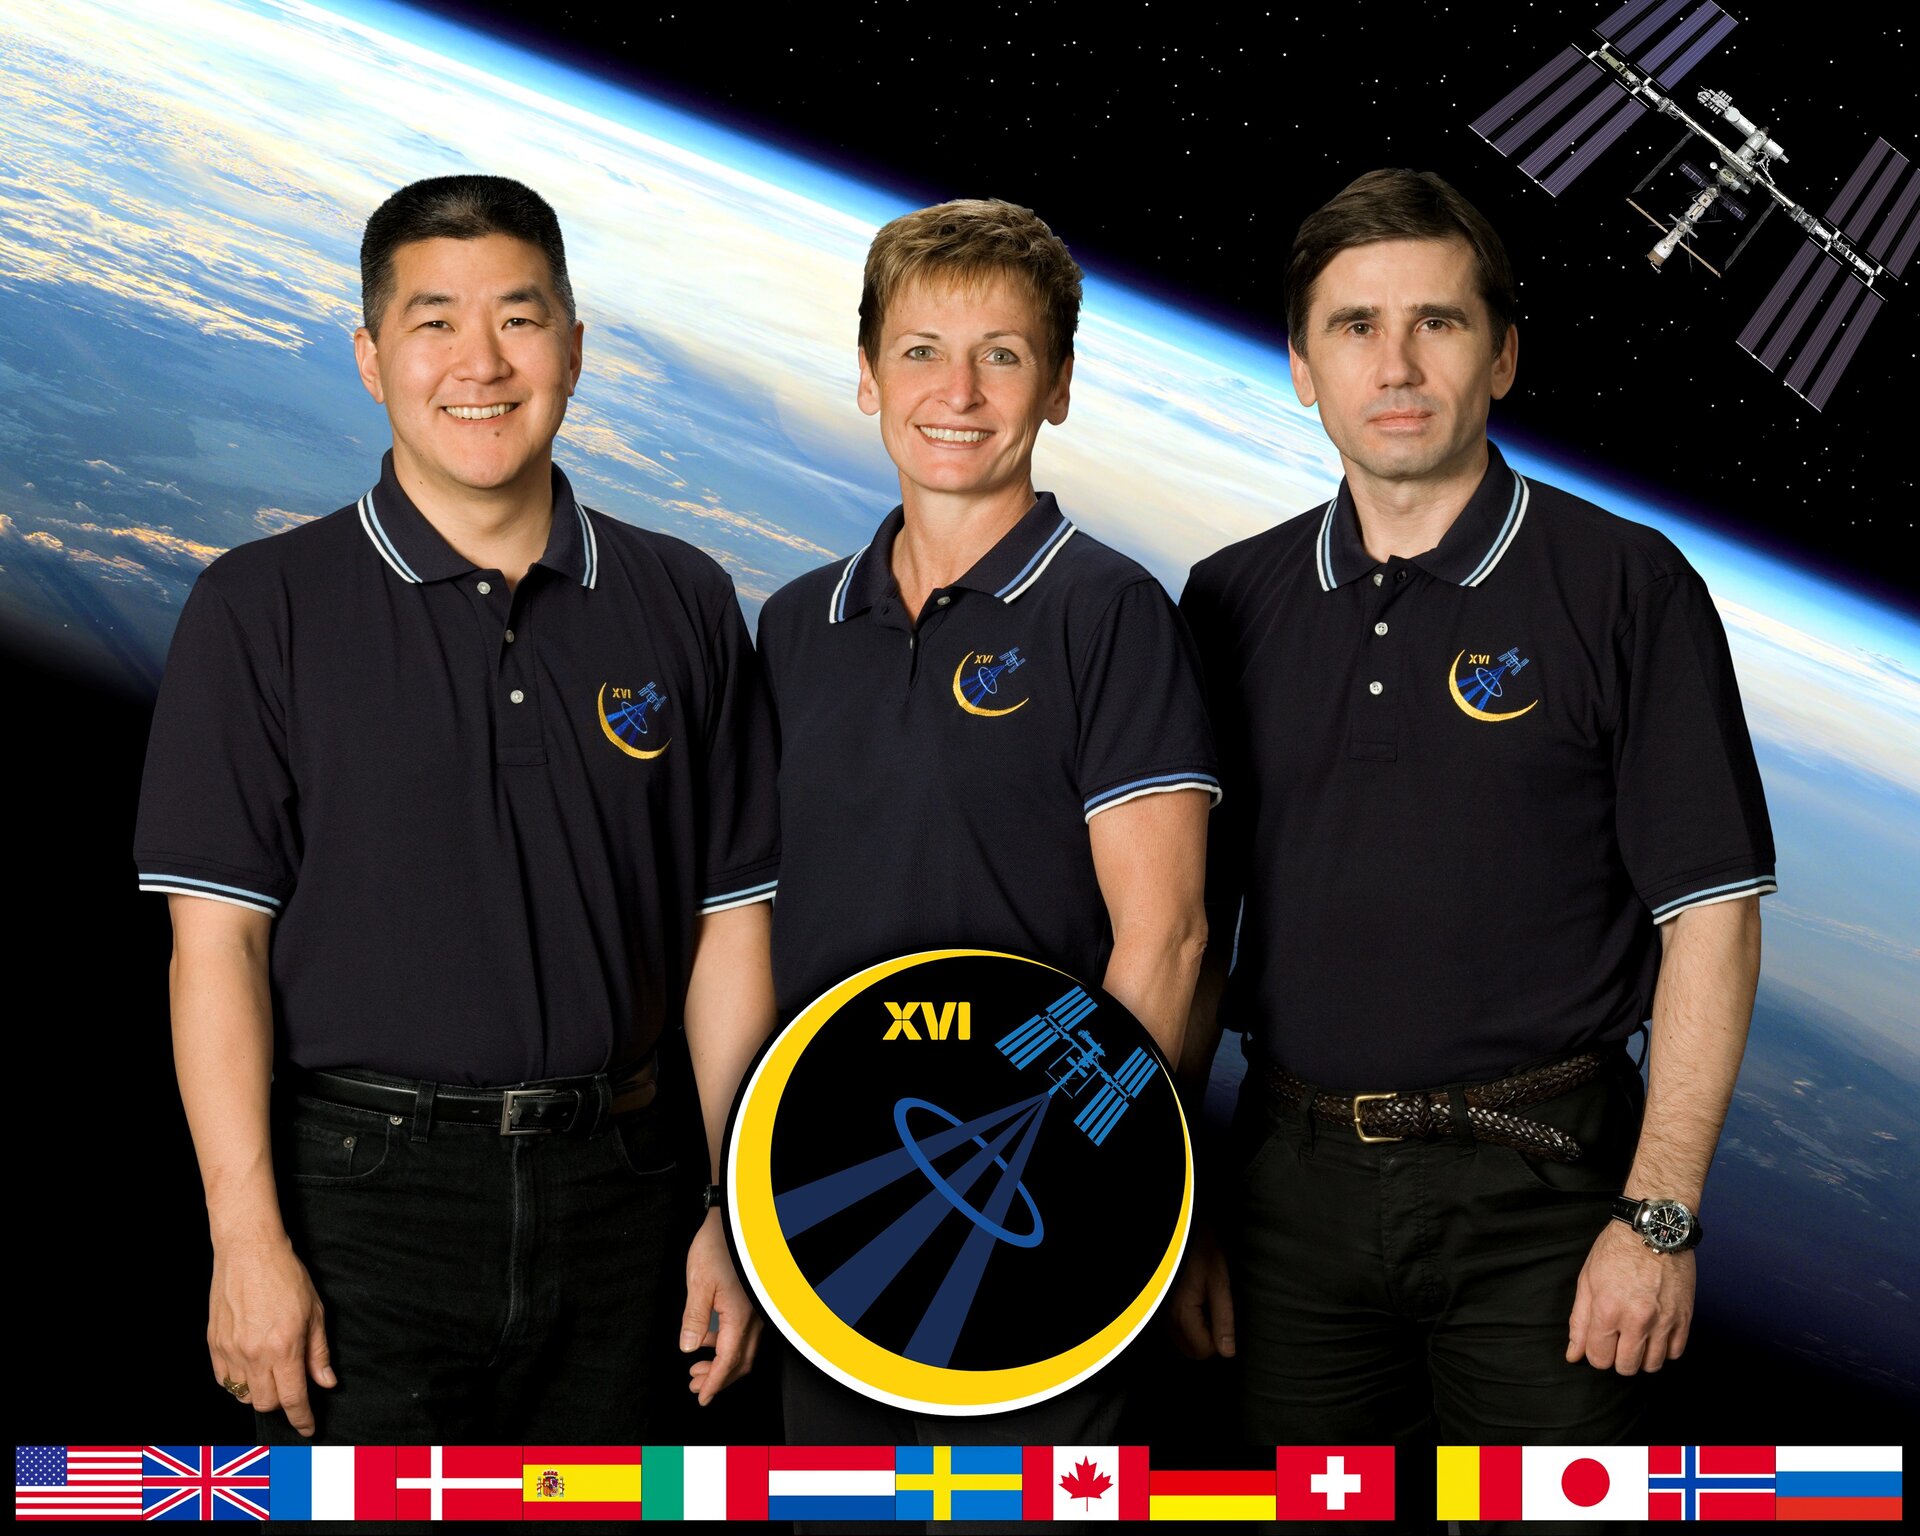 Expedition 16 crew: Daniel Tani, Peggy Whitson and Yuri Malenchenko